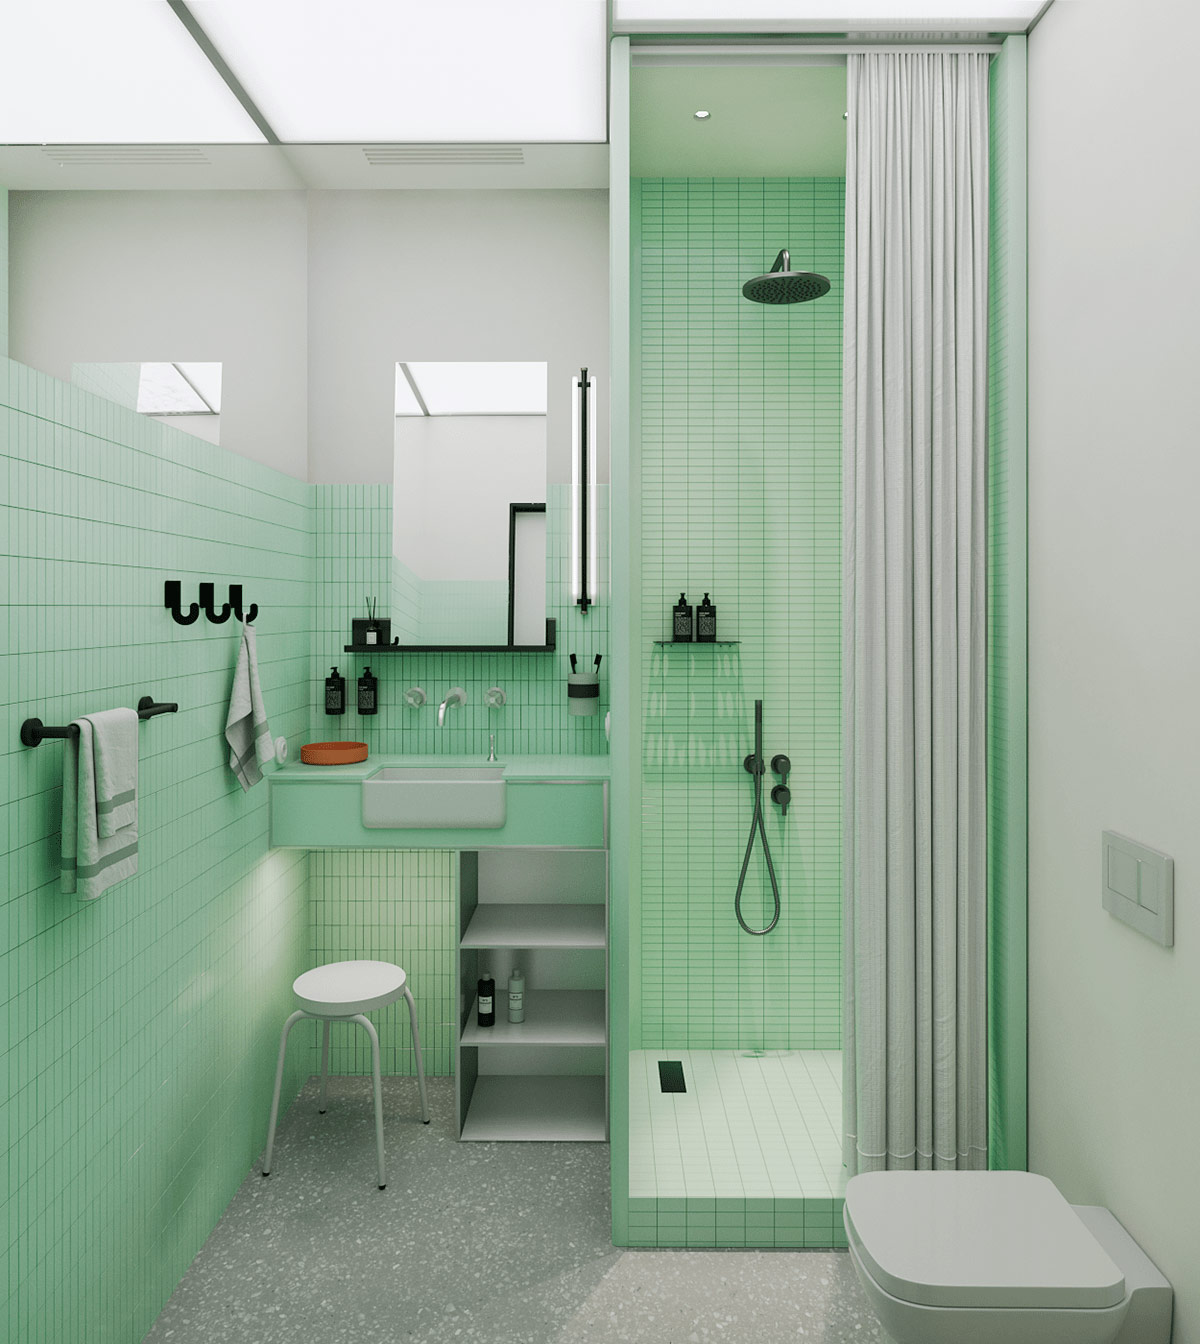 A white farmhouse sink and black bathroom fixtures break up this bold, seafoam green bathroom design.